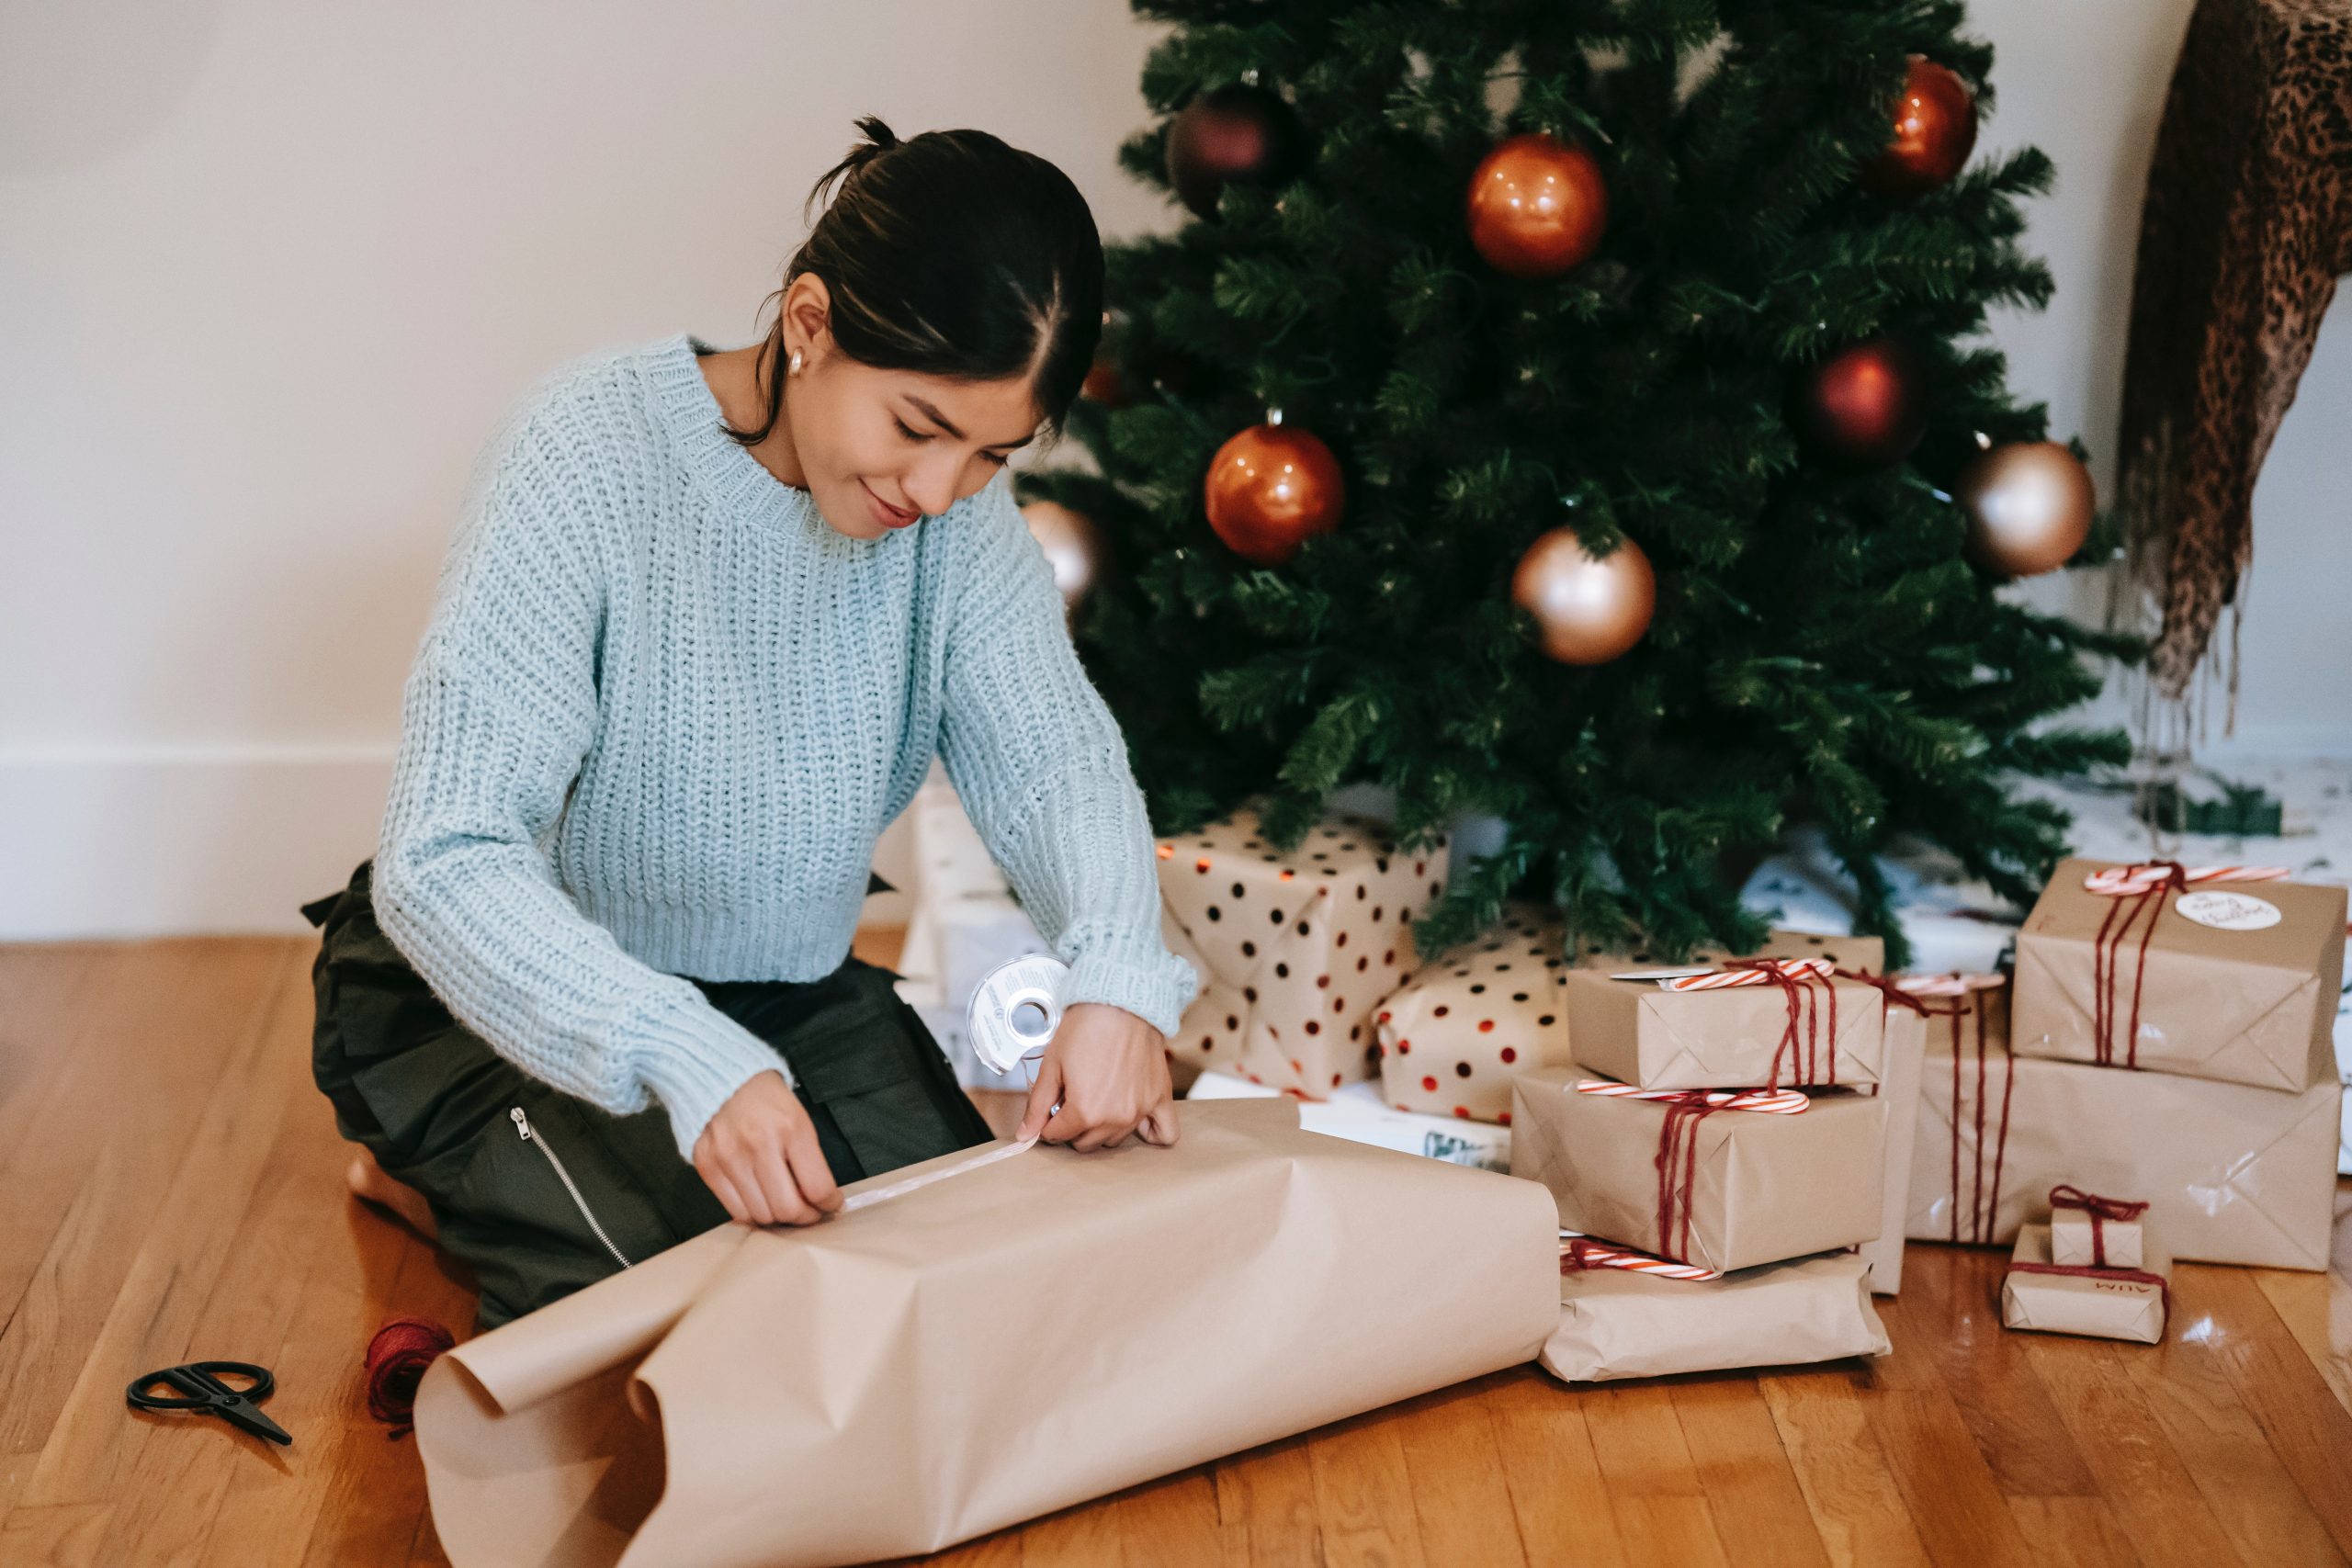 woman wrapping present box near christmas tree